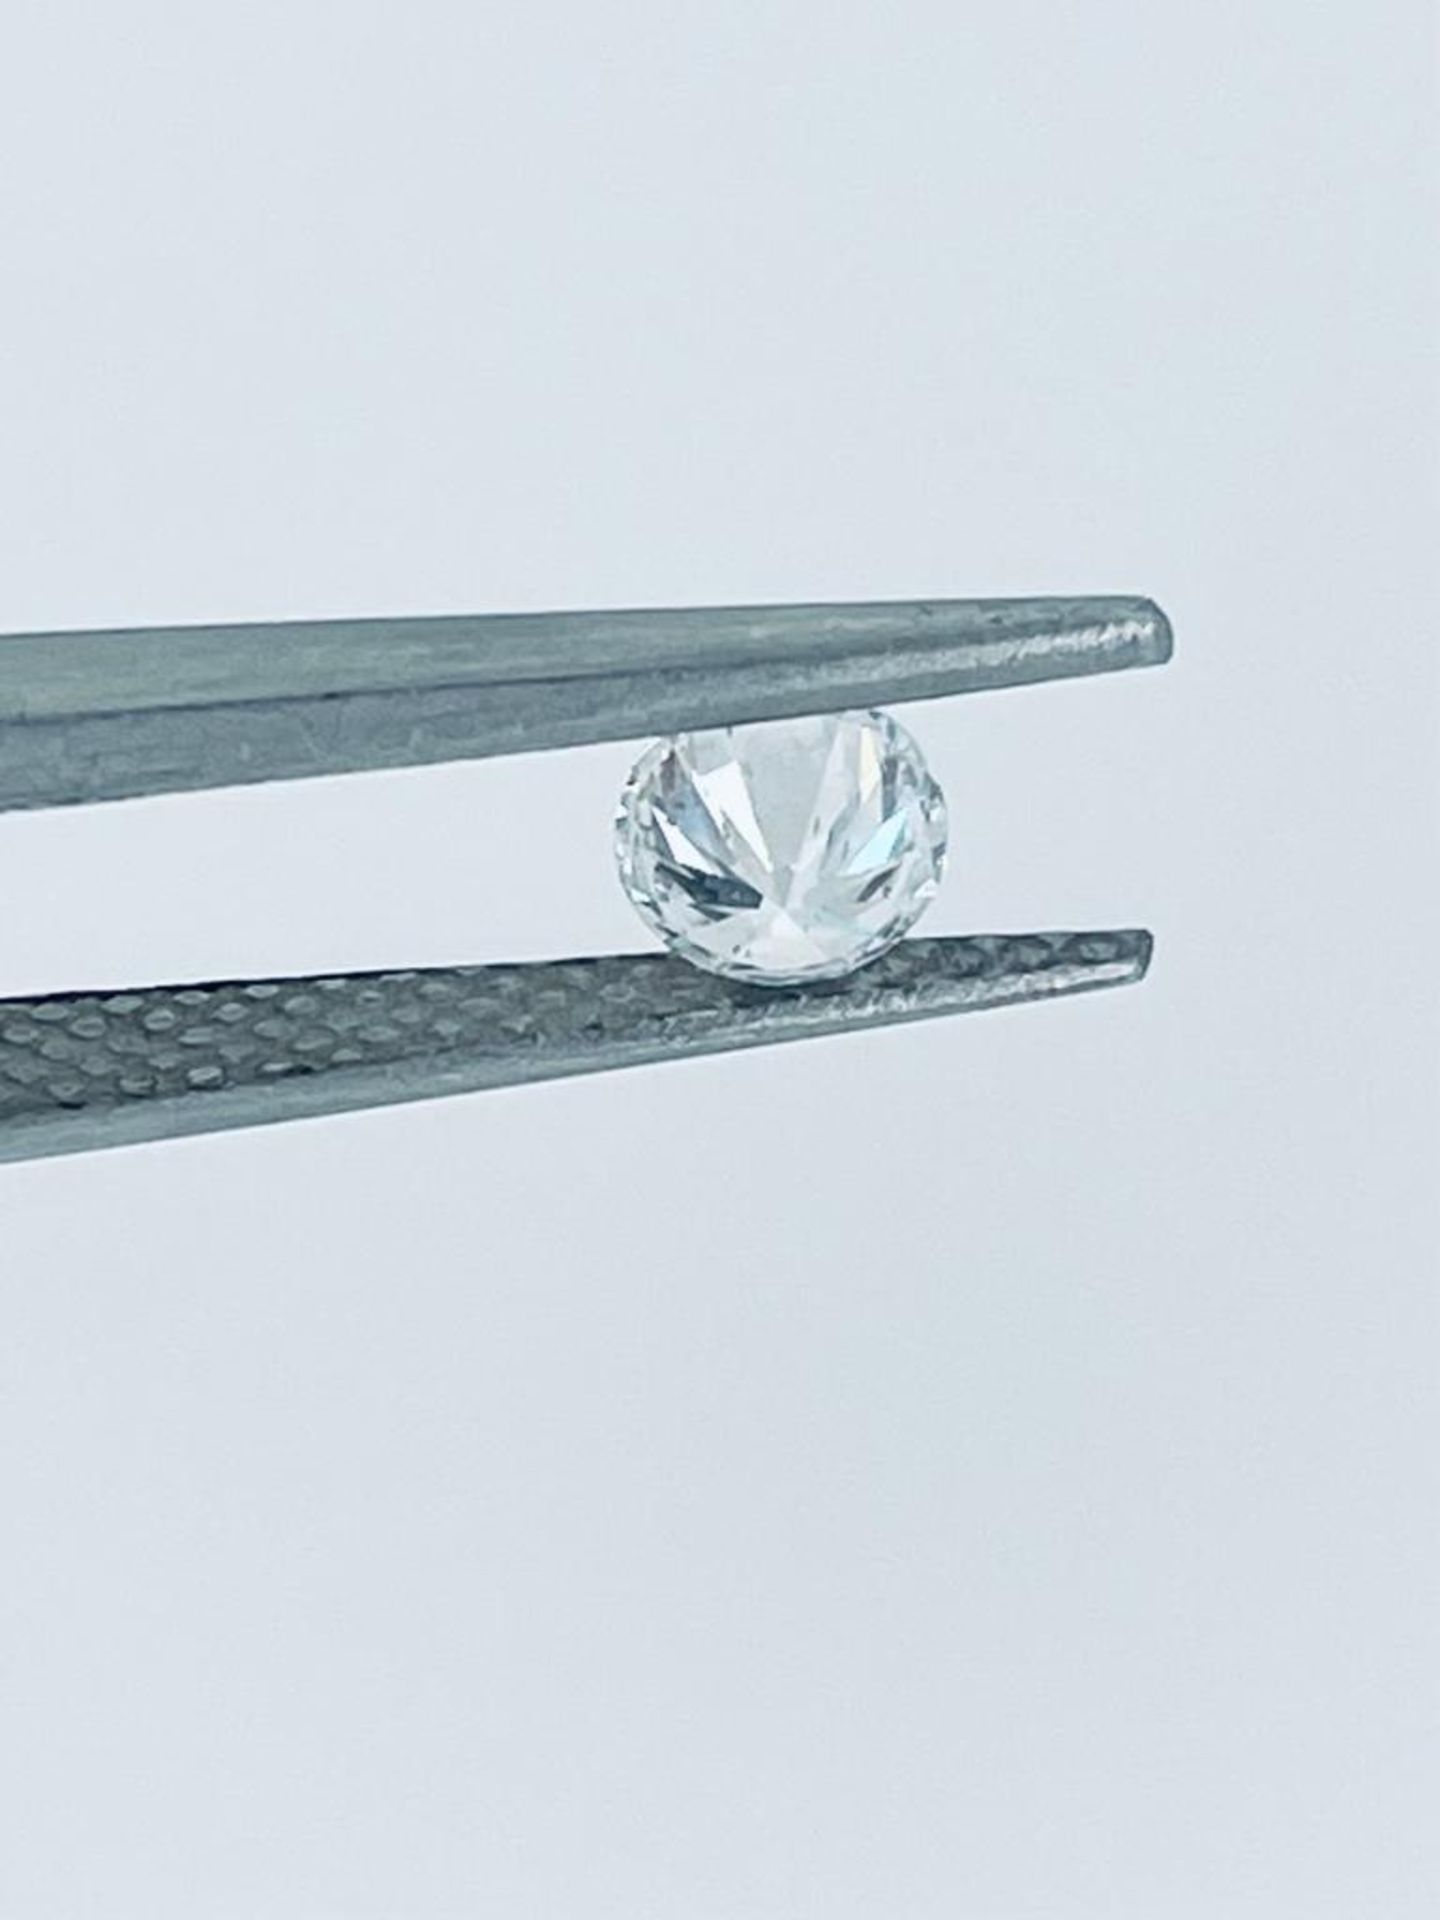 1 DIAMOND 0,56 CT D - SI1 - SHAPE BRILLANT - CERTIFICATION GIA - LG10502 - Image 2 of 6